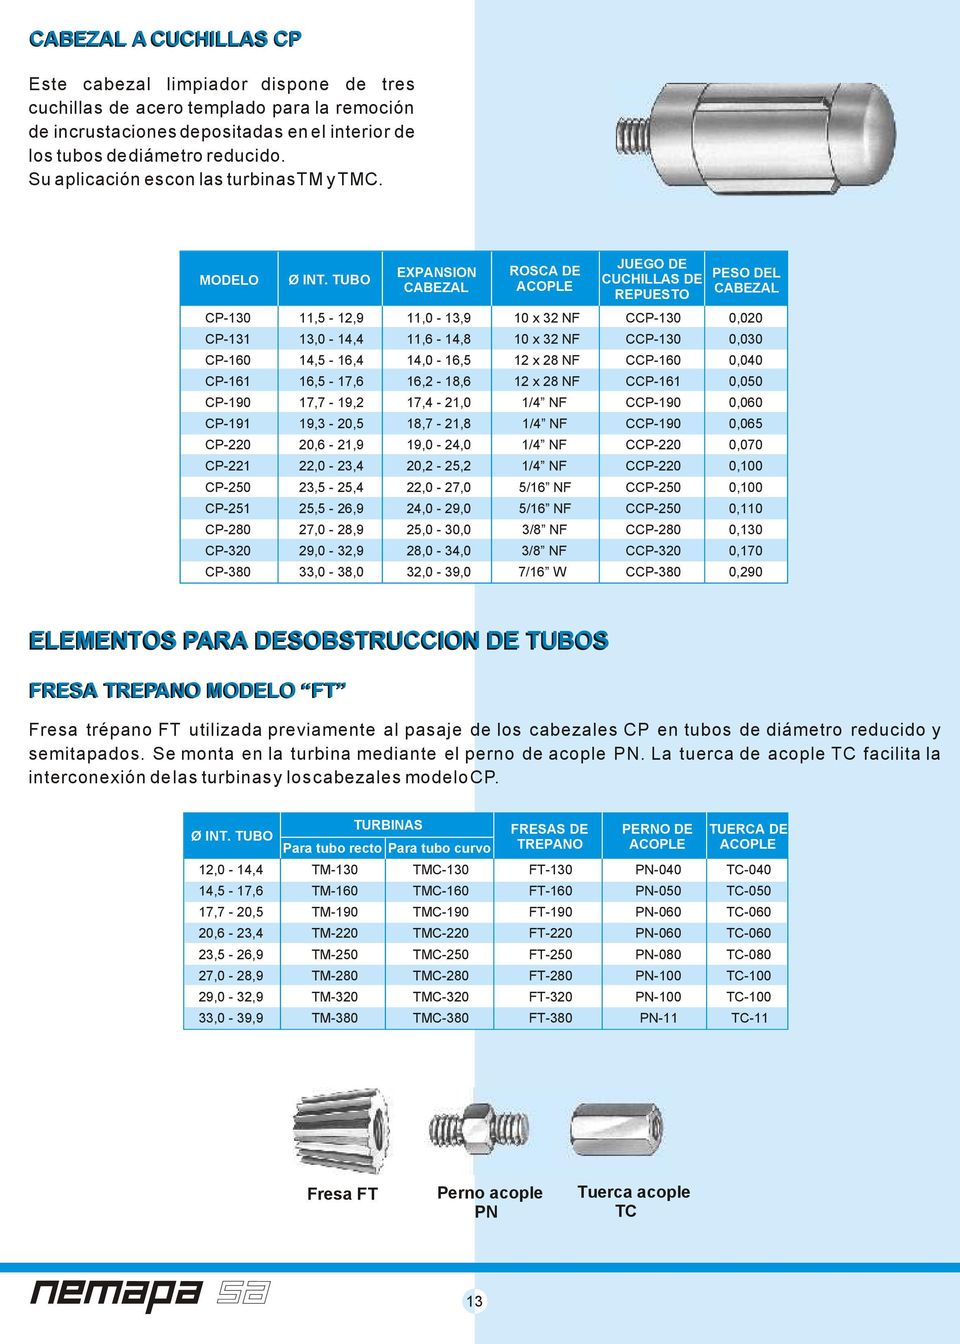 TUBO EXPANSION CABEZAL ROSCA DE JUEGO DE CUCHILLAS DE REPUESTO PESO DEL CABEZAL CP-130 11,5-1,9 11,0-13,9 10 x 3 NF CCP-130 0,00 CP-131 13,0-14,4 11,6-14,8 10 x 3 NF CCP-130 0,030 CP-160 14,5-16,4